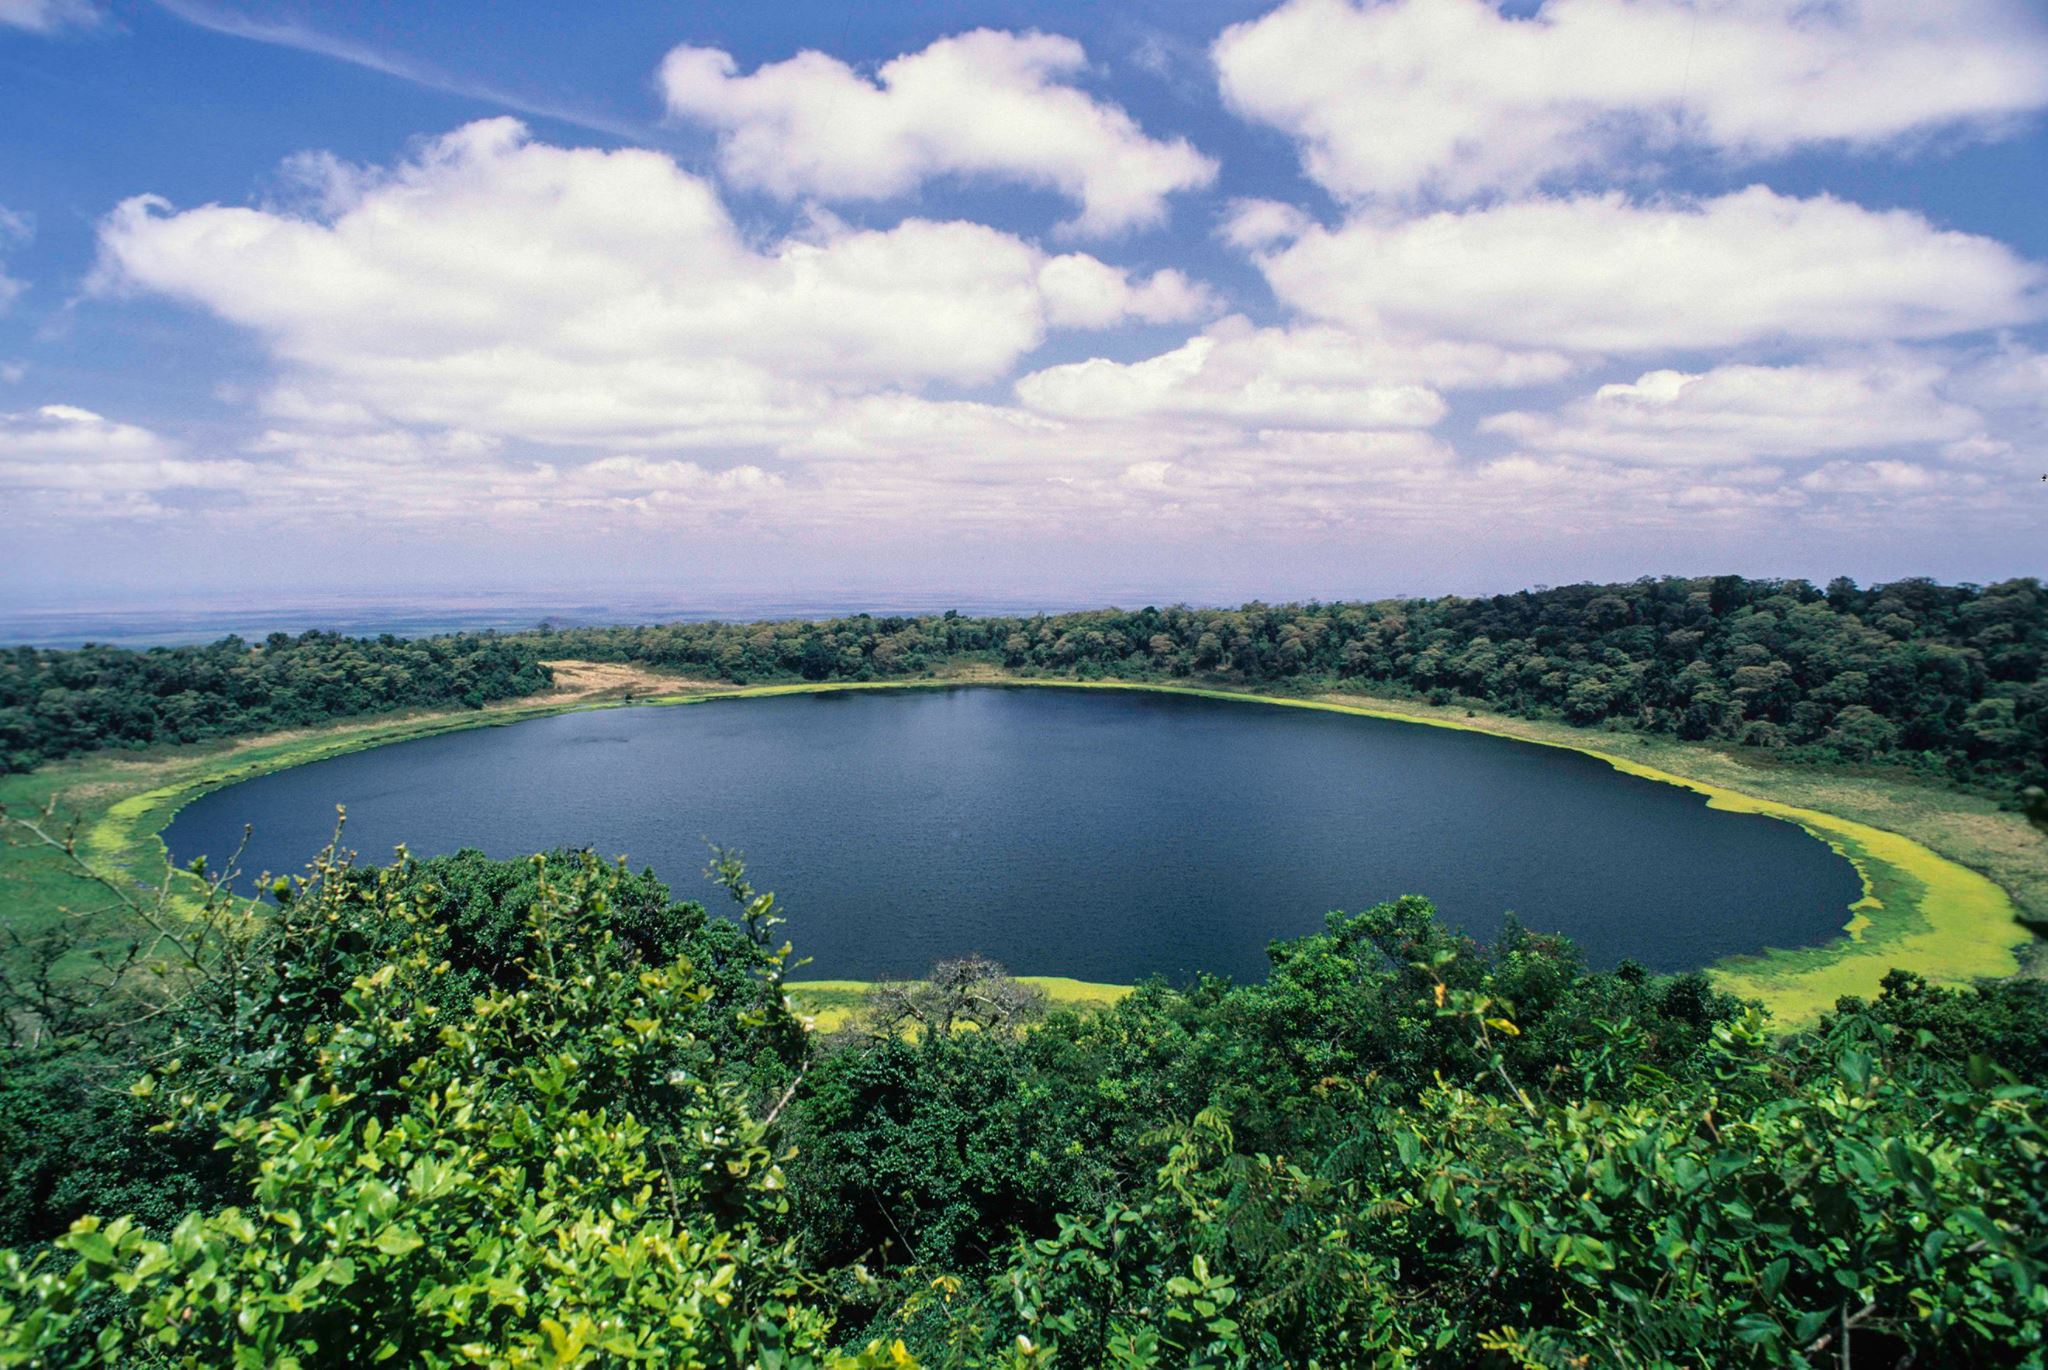 The Crater lake in Naivasha